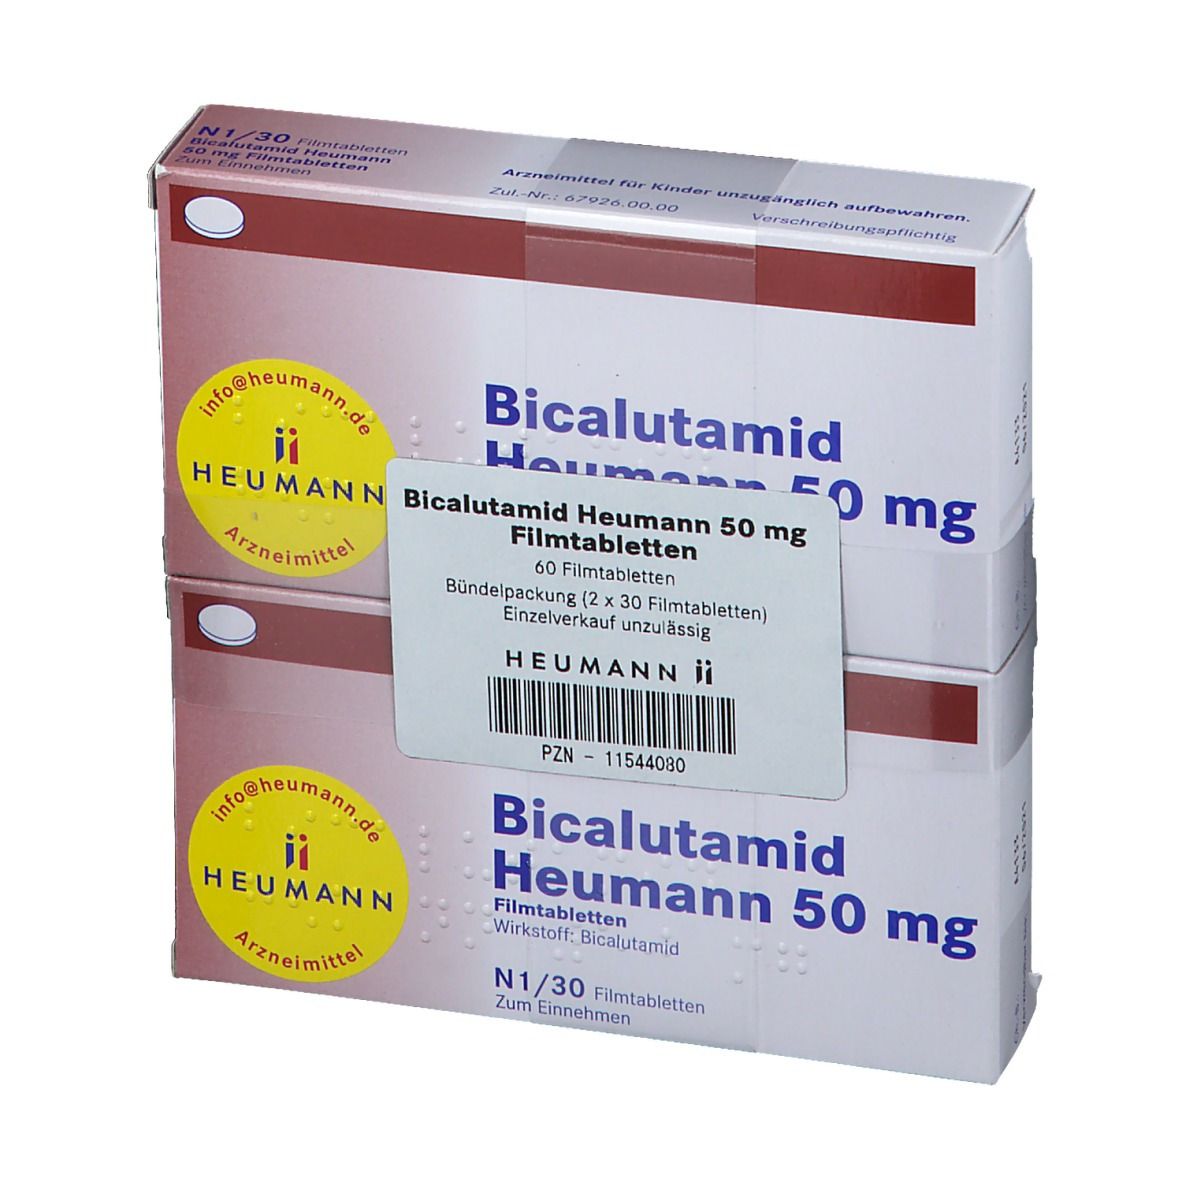 Bicalutamid Heumann 50 mg